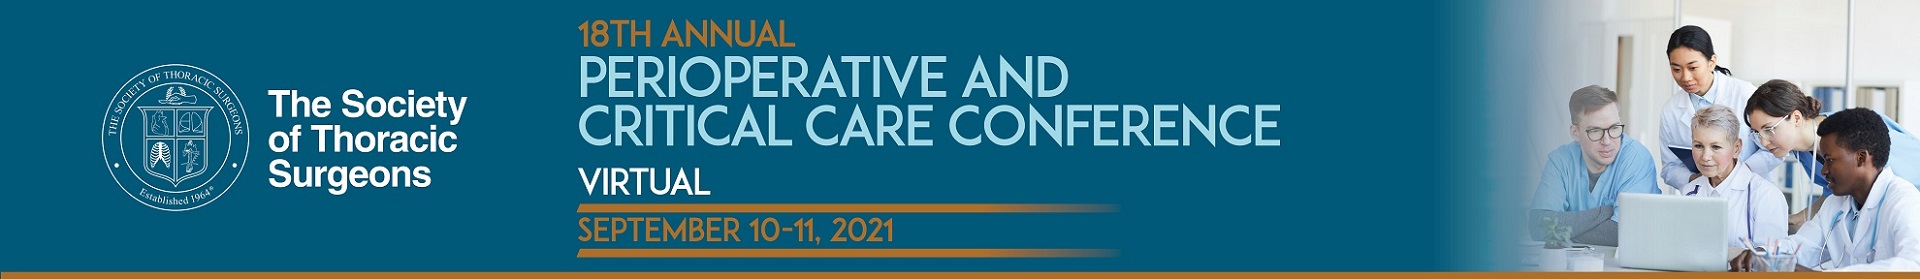 18th Annual Perioperative and Critical Care Conference Event Banner